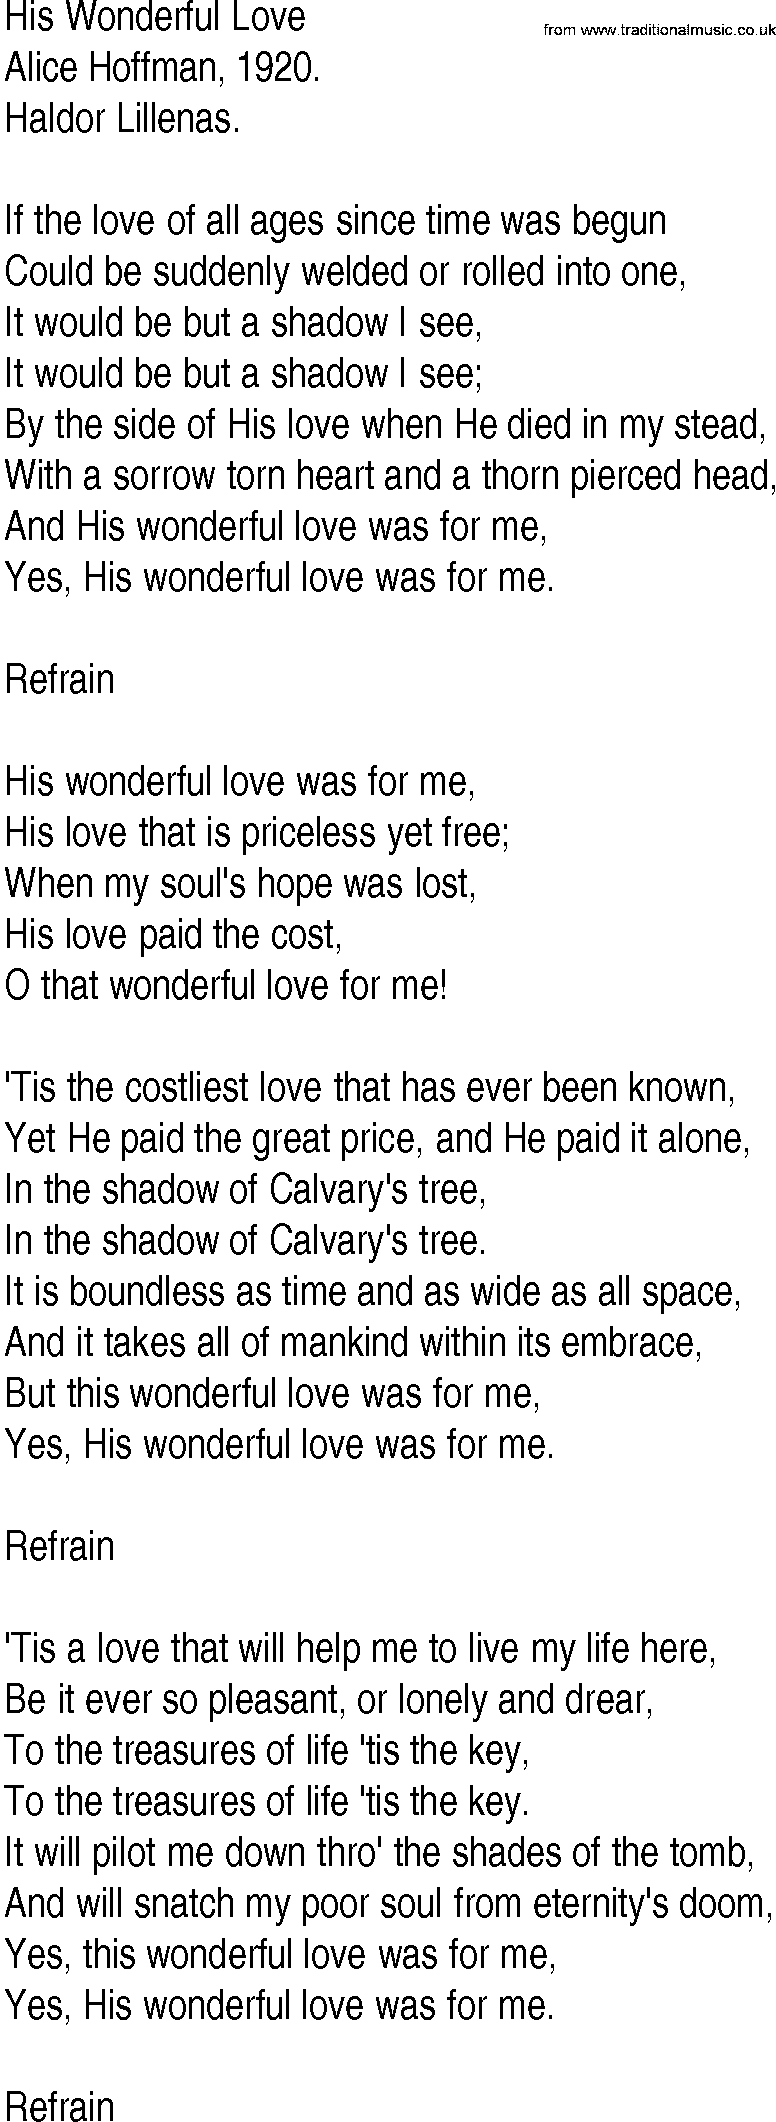 Hymn and Gospel Song: His Wonderful Love by Alice Hoffman lyrics